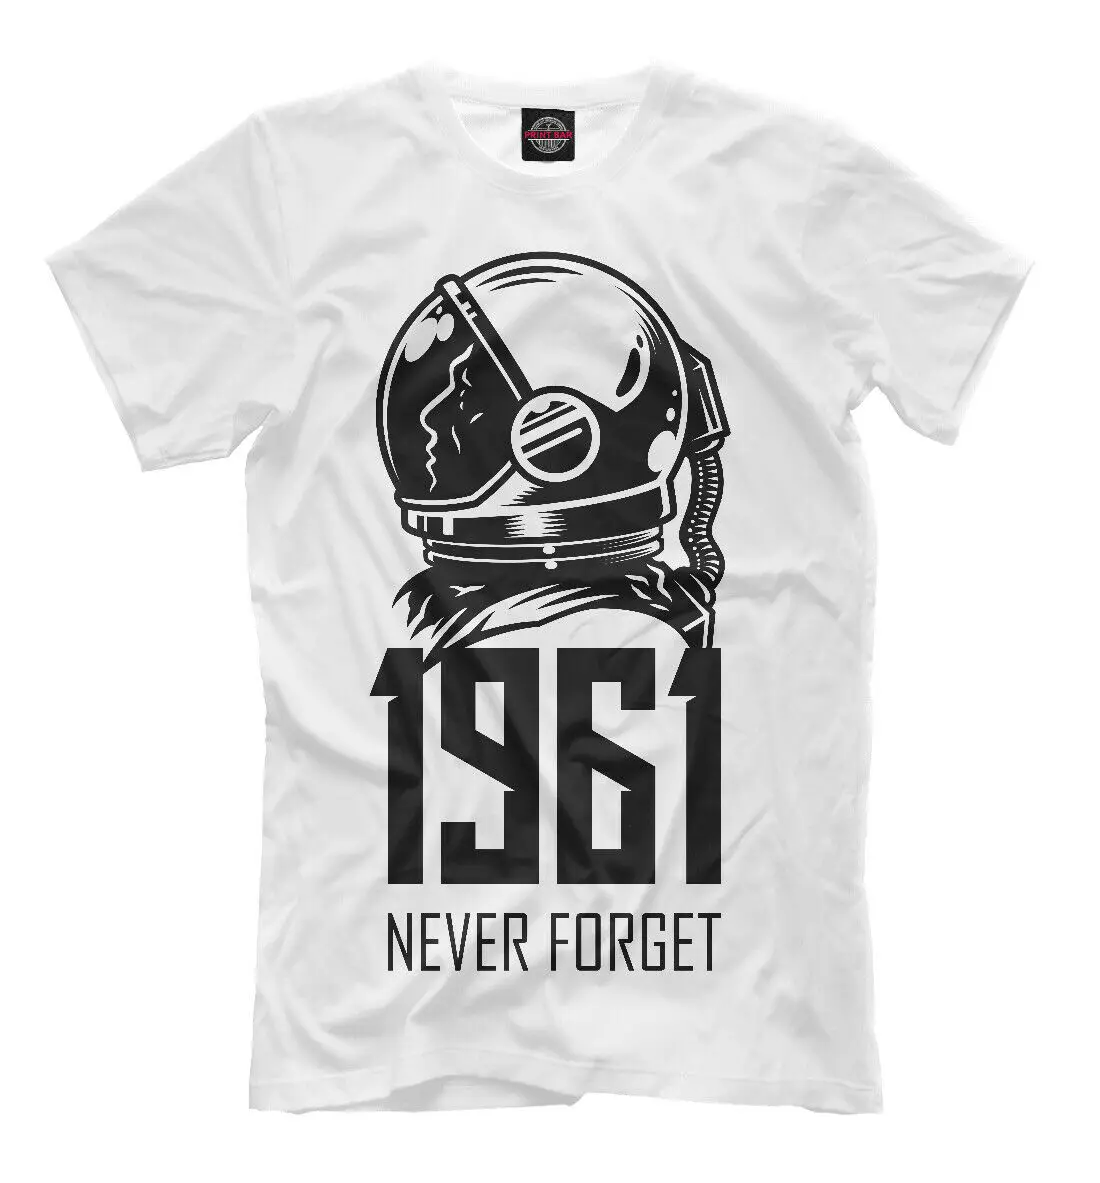 Nikdy nezabudnem na Nové Muži T-shirt prvý astronaut gagarin ZSSR a Ruska